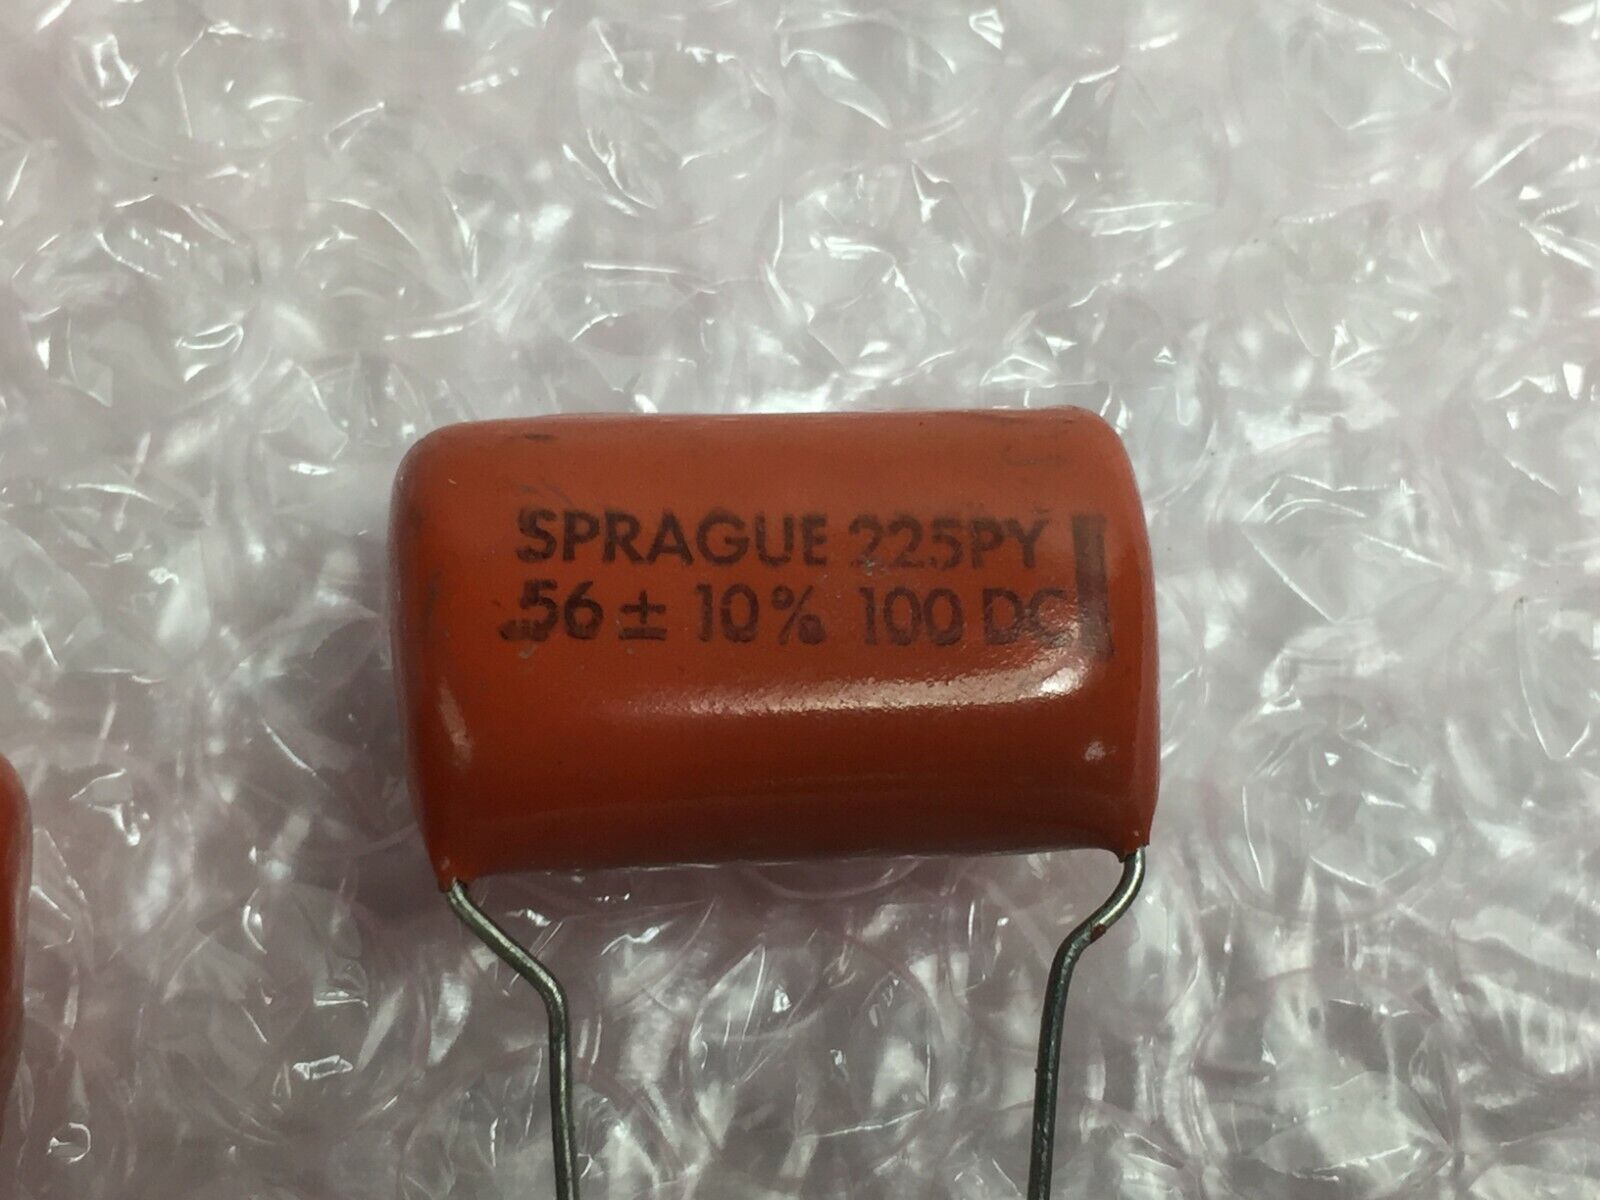 (3) Sprague 225PY .56  100 DC Orange Drop Capacitor  Lot of 3